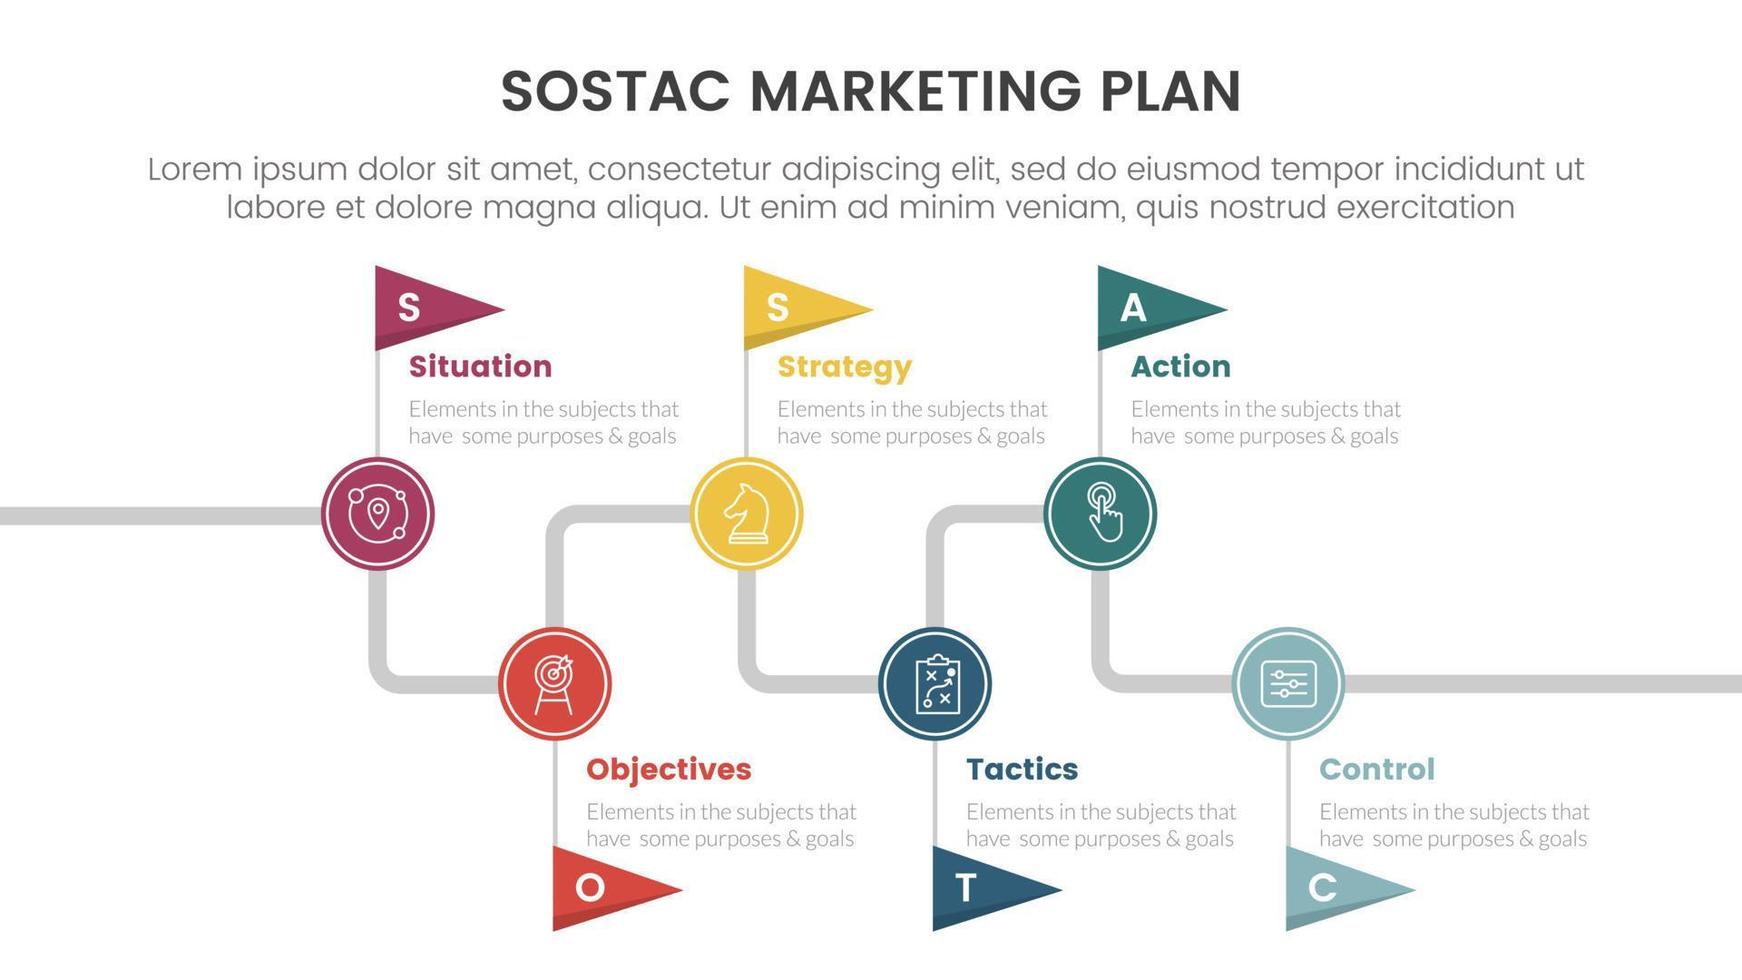 sostac digital márketing plan infografía 6 6 punto etapa modelo con circulo y bandera cronograma Derecha dirección concepto para diapositiva presentación vector